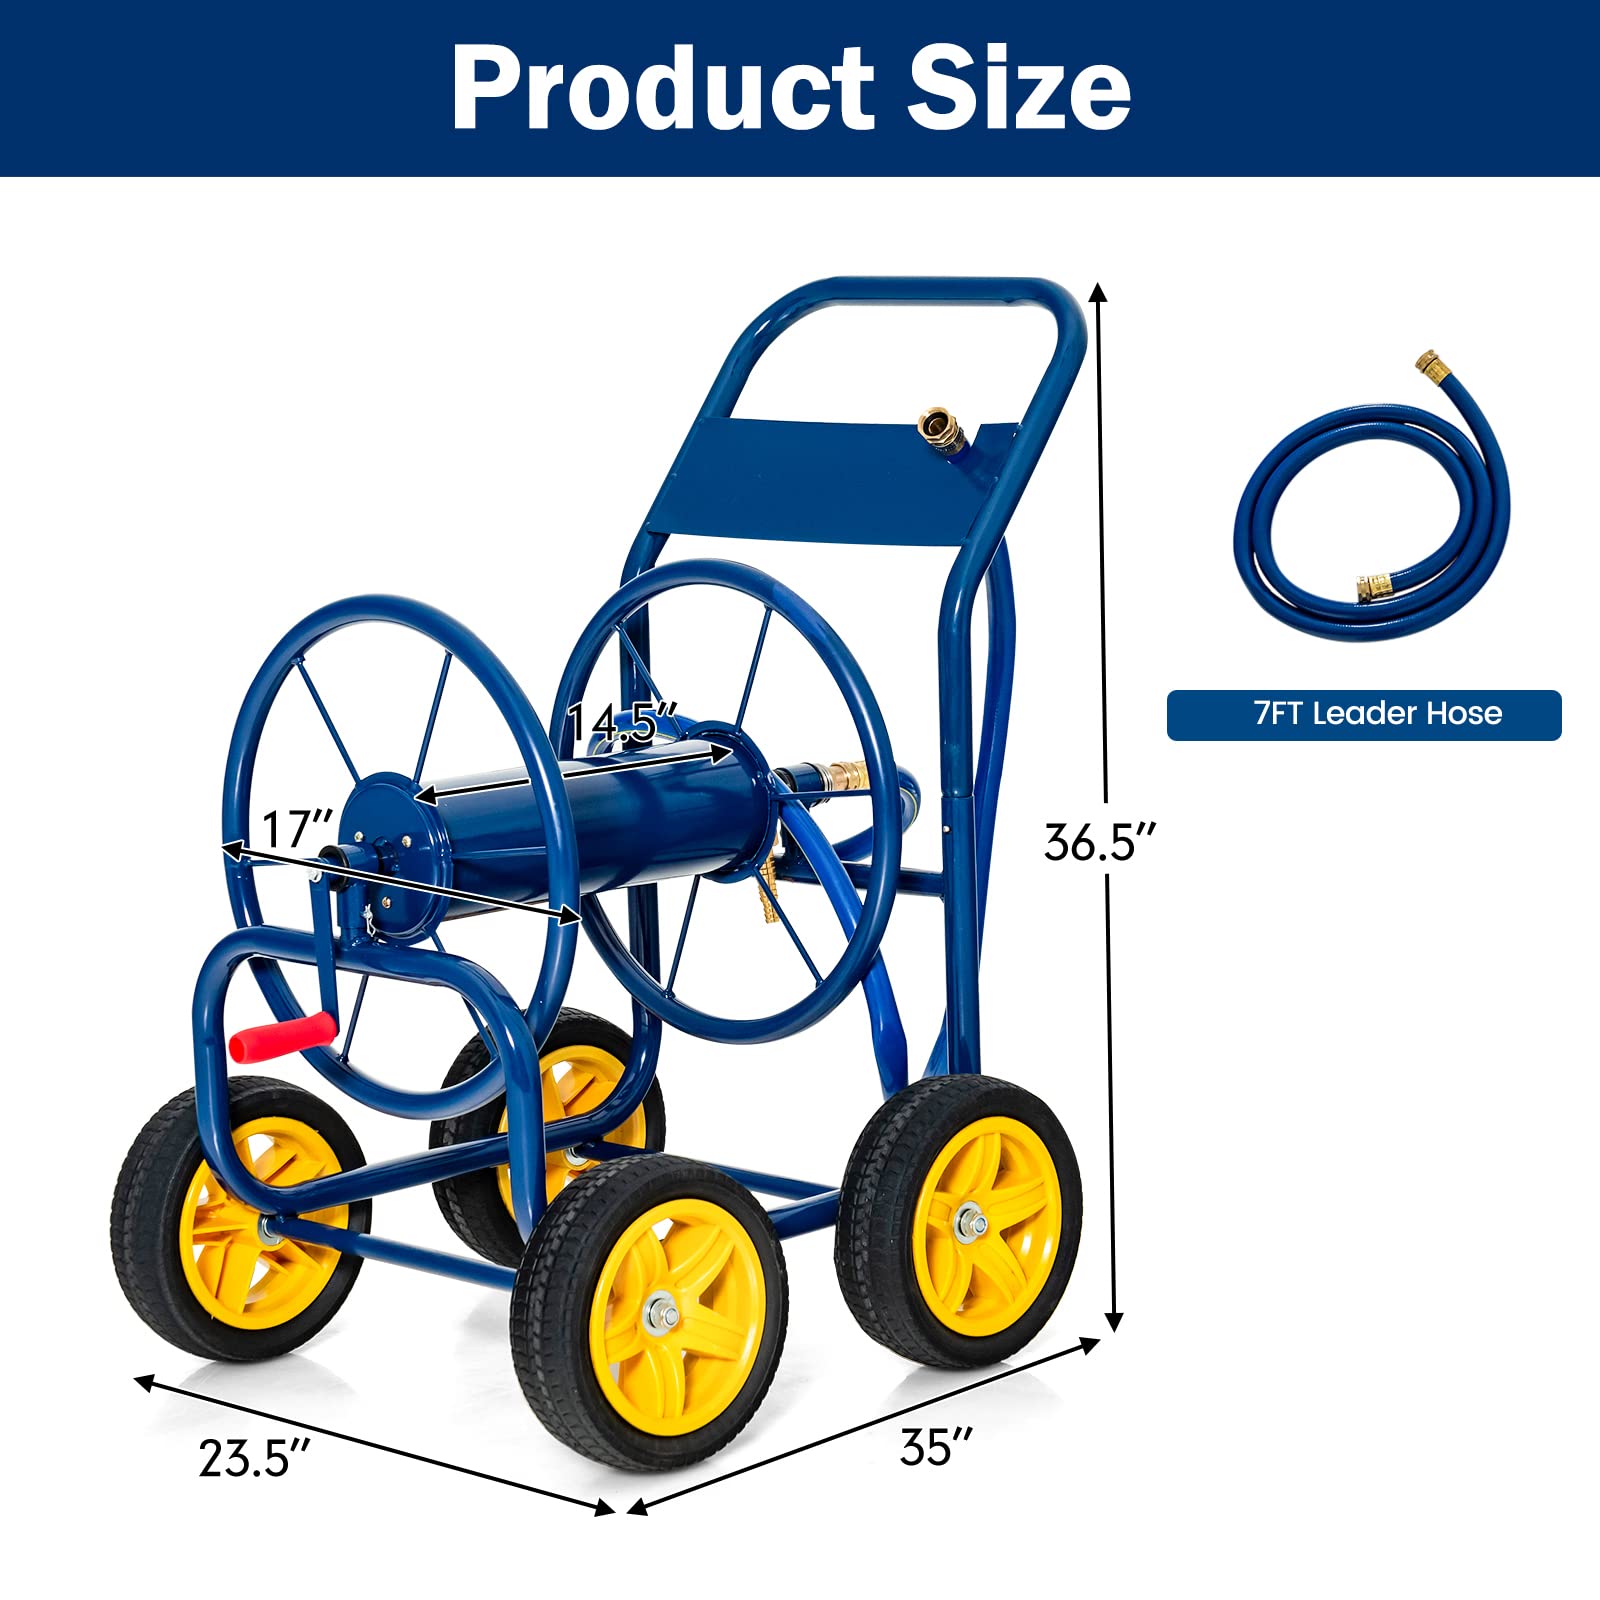 Giantex Garden Hose Reel Cart - Water Hose Cart with 4 Wheels & Non-slip Grip